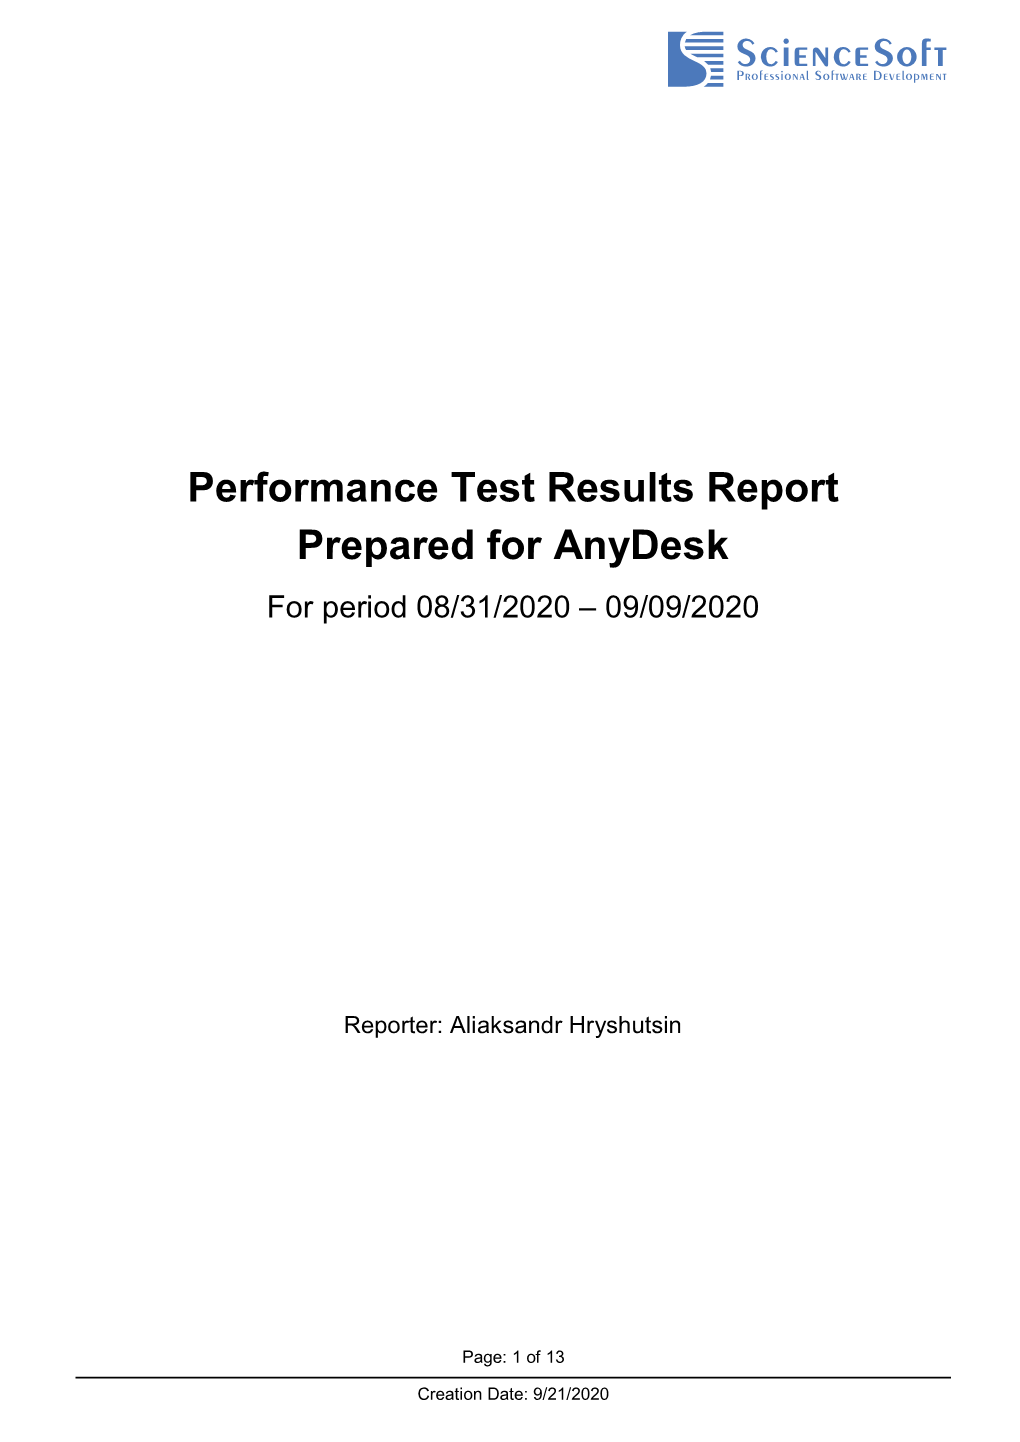 Test Result Report for Anydesk